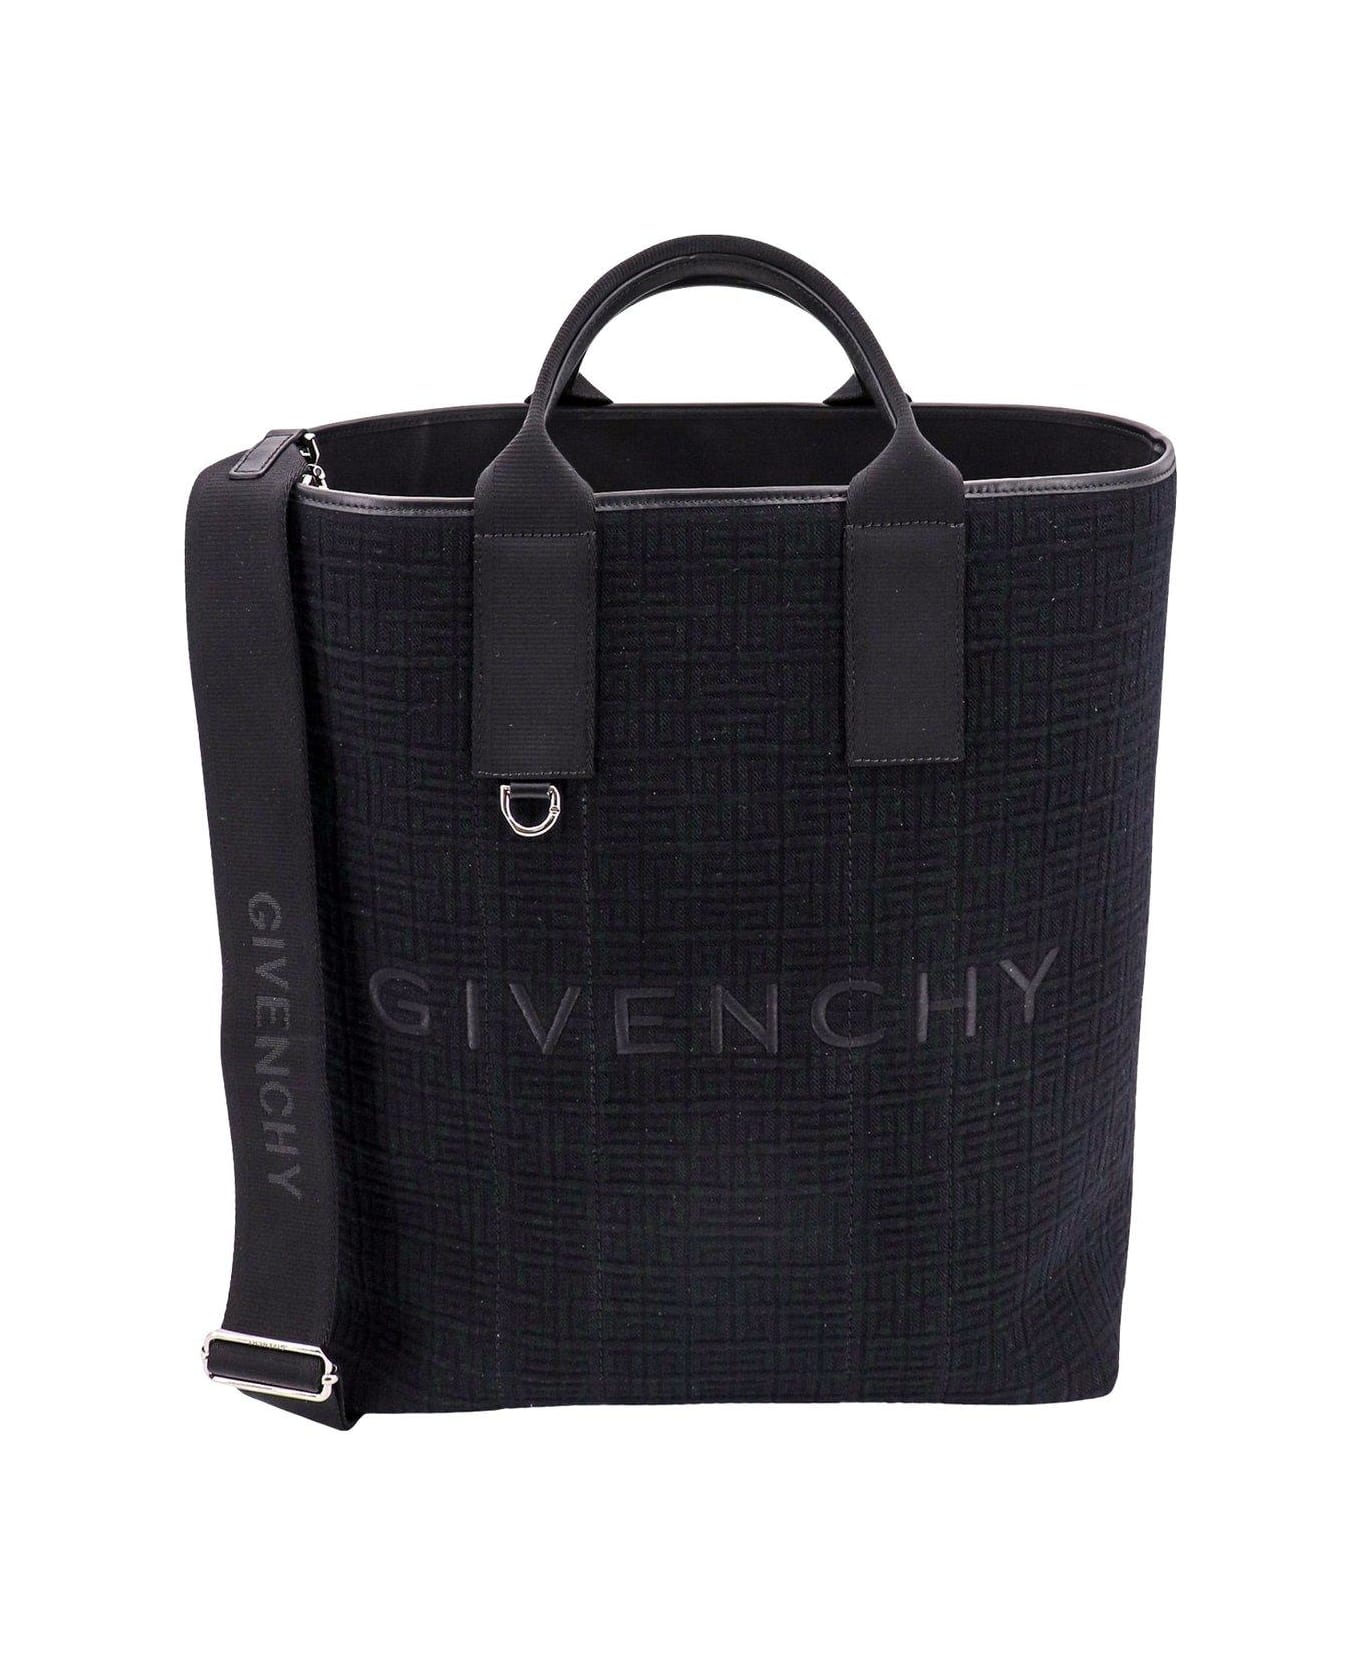 Givenchy Large G-essentials Tote Bag - Black